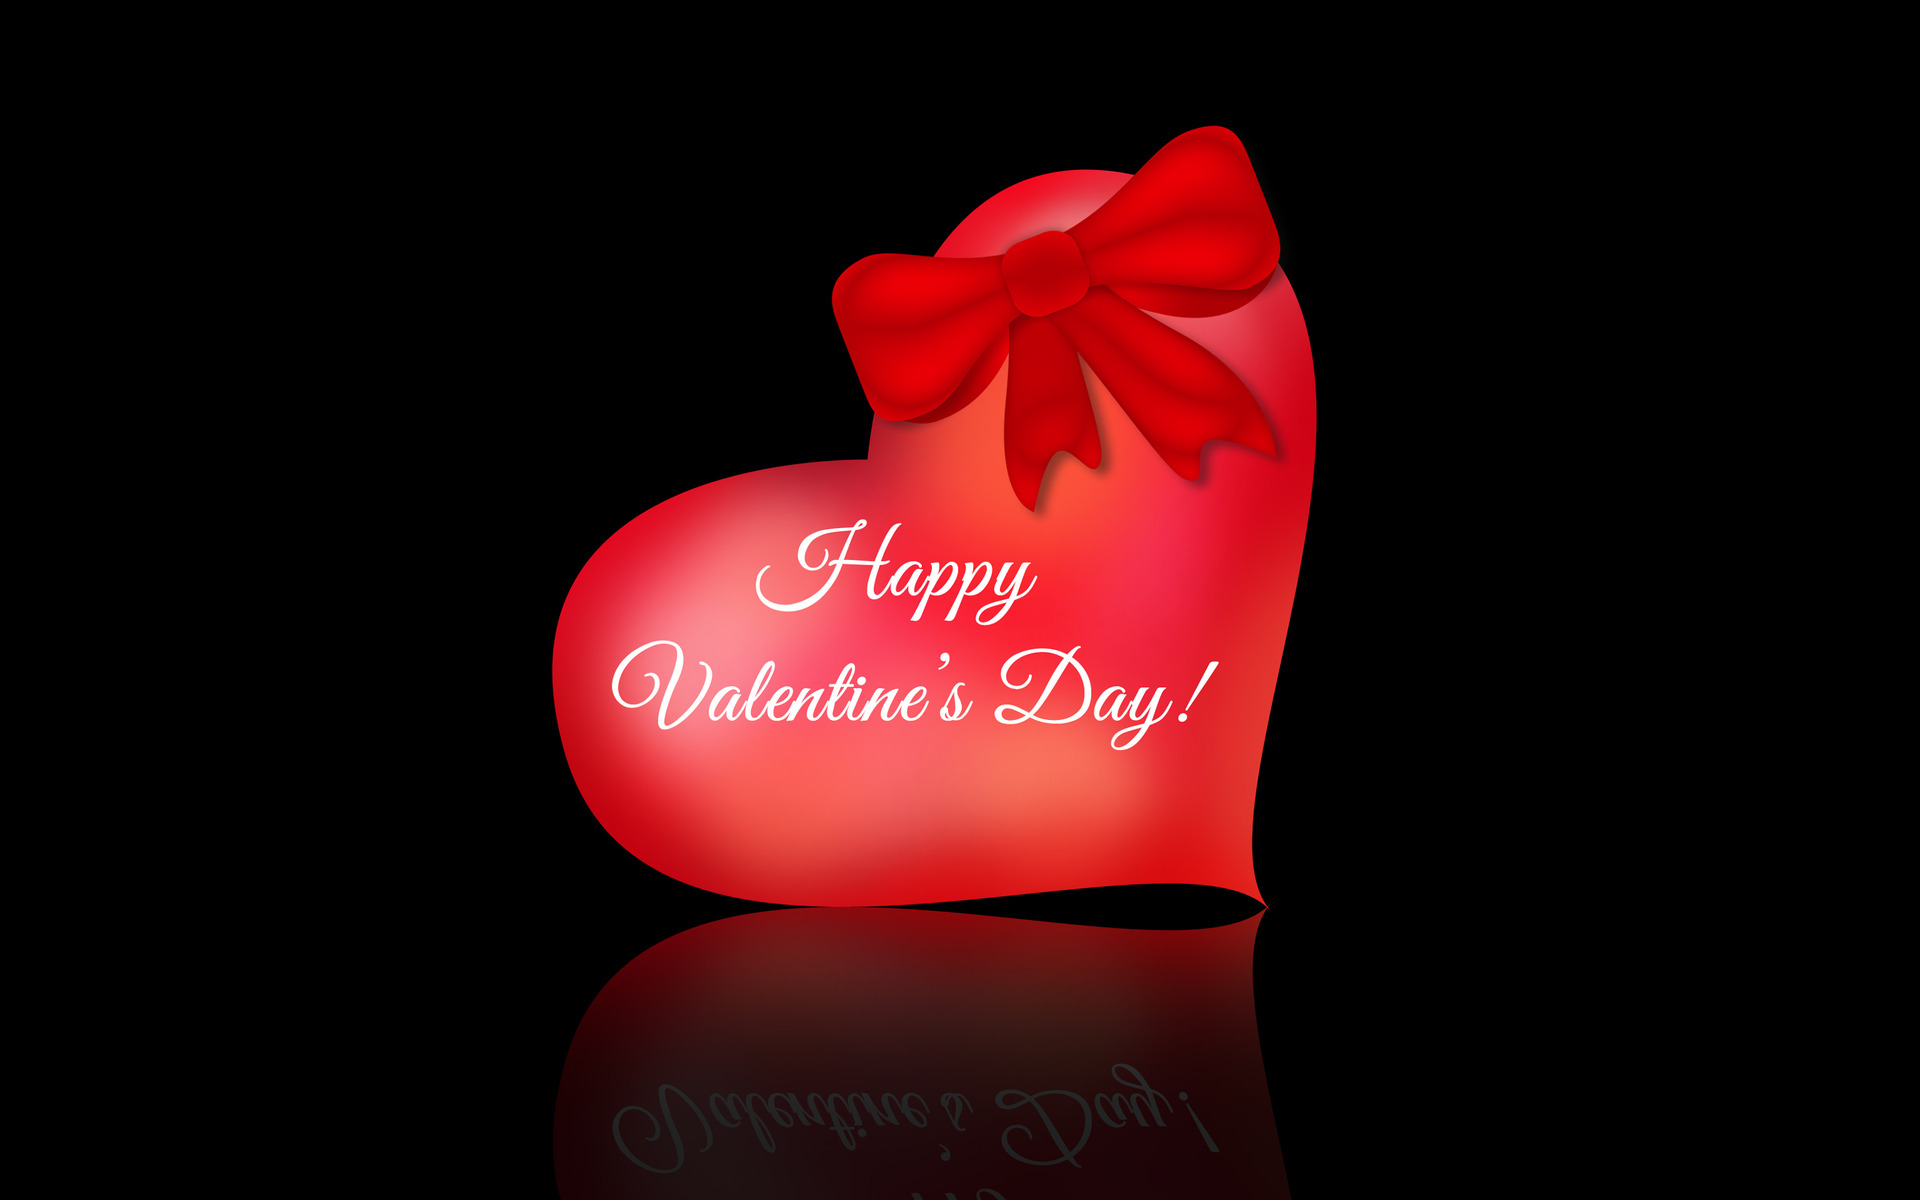 Happy Valentines Day Background Wallpaper 49902 - Baltana